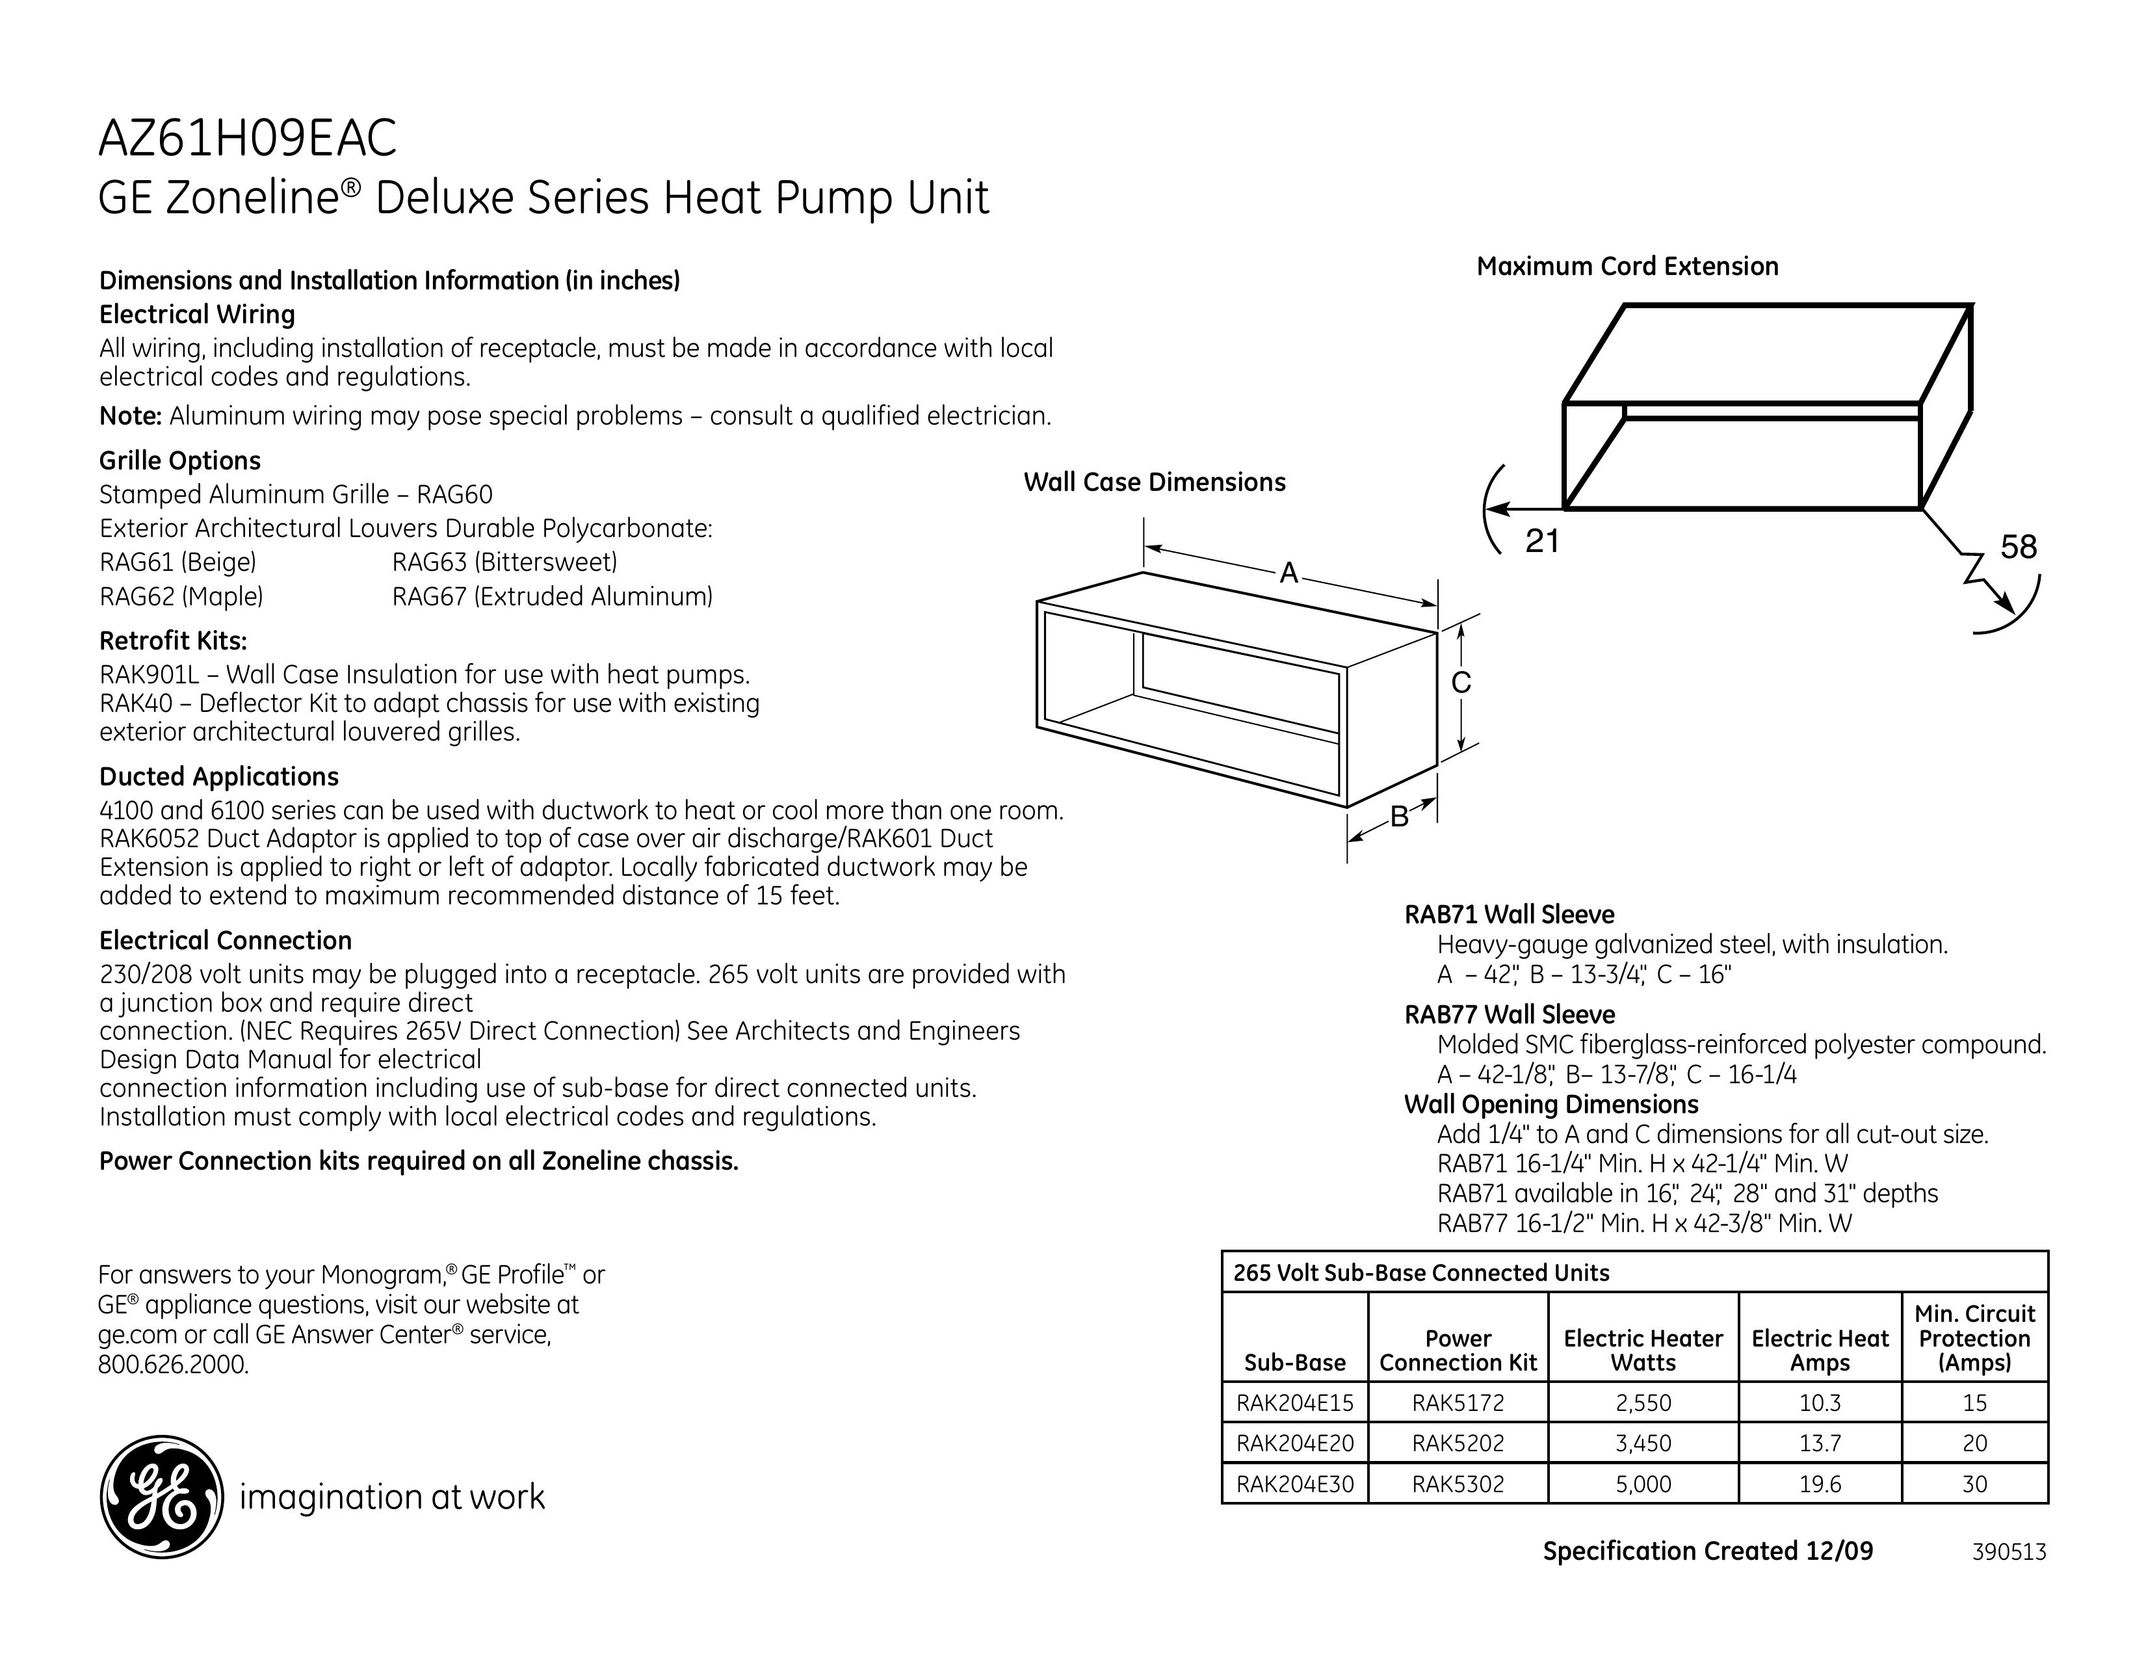 GE AZ61H09EAC Heat Pump User Manual